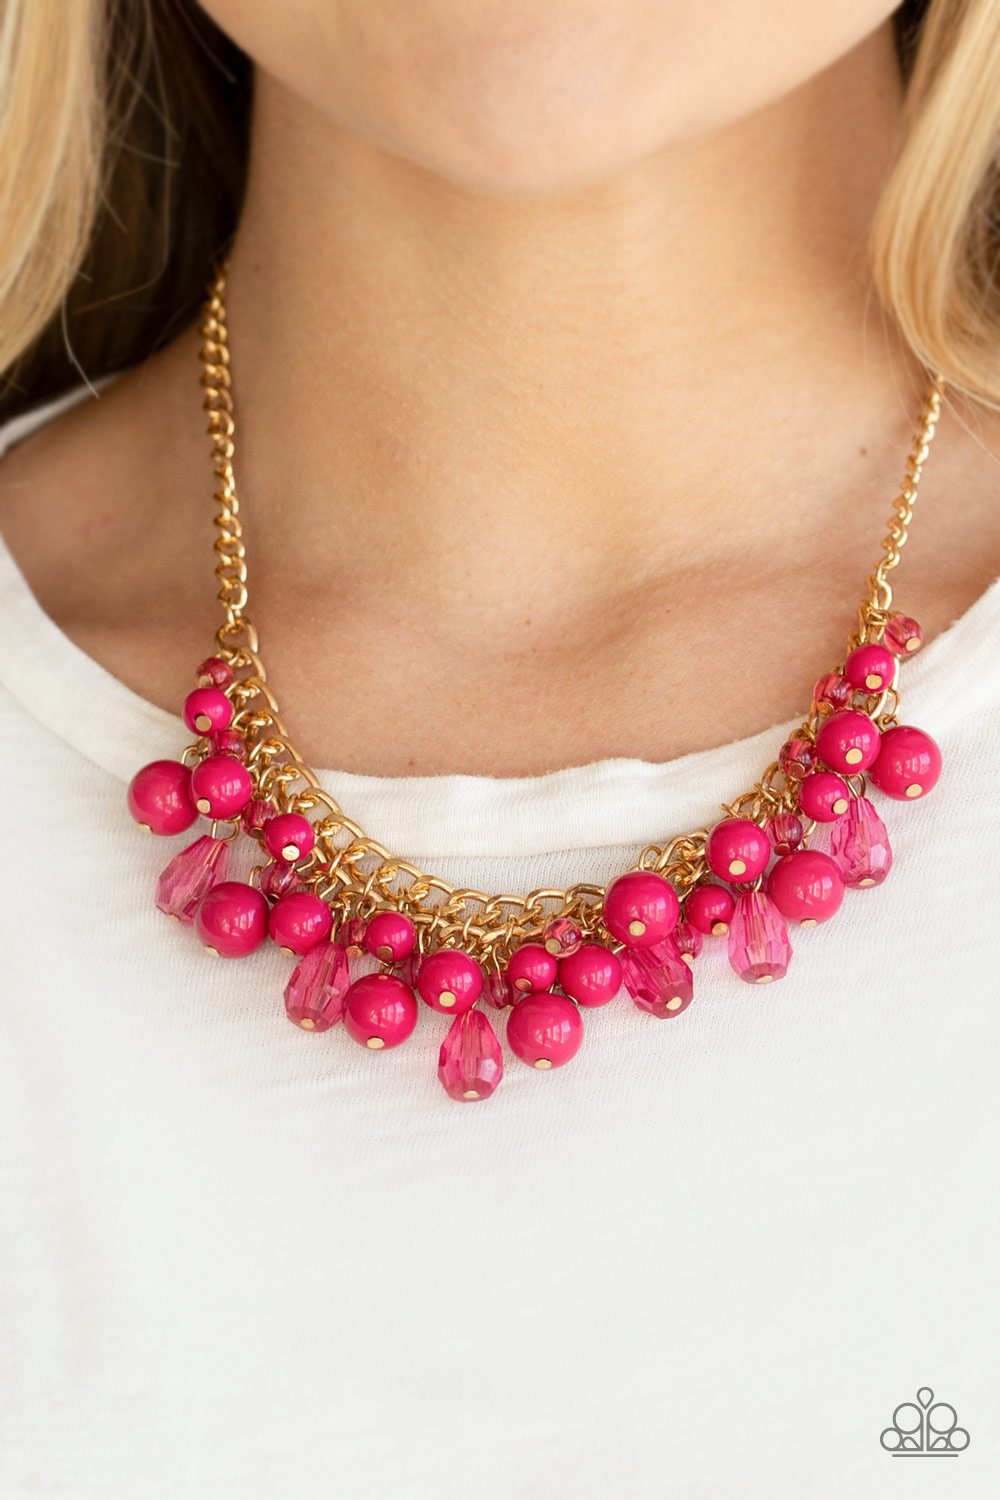 Tour de Trendsetter Pink
Necklace - Daria's Blings N Things